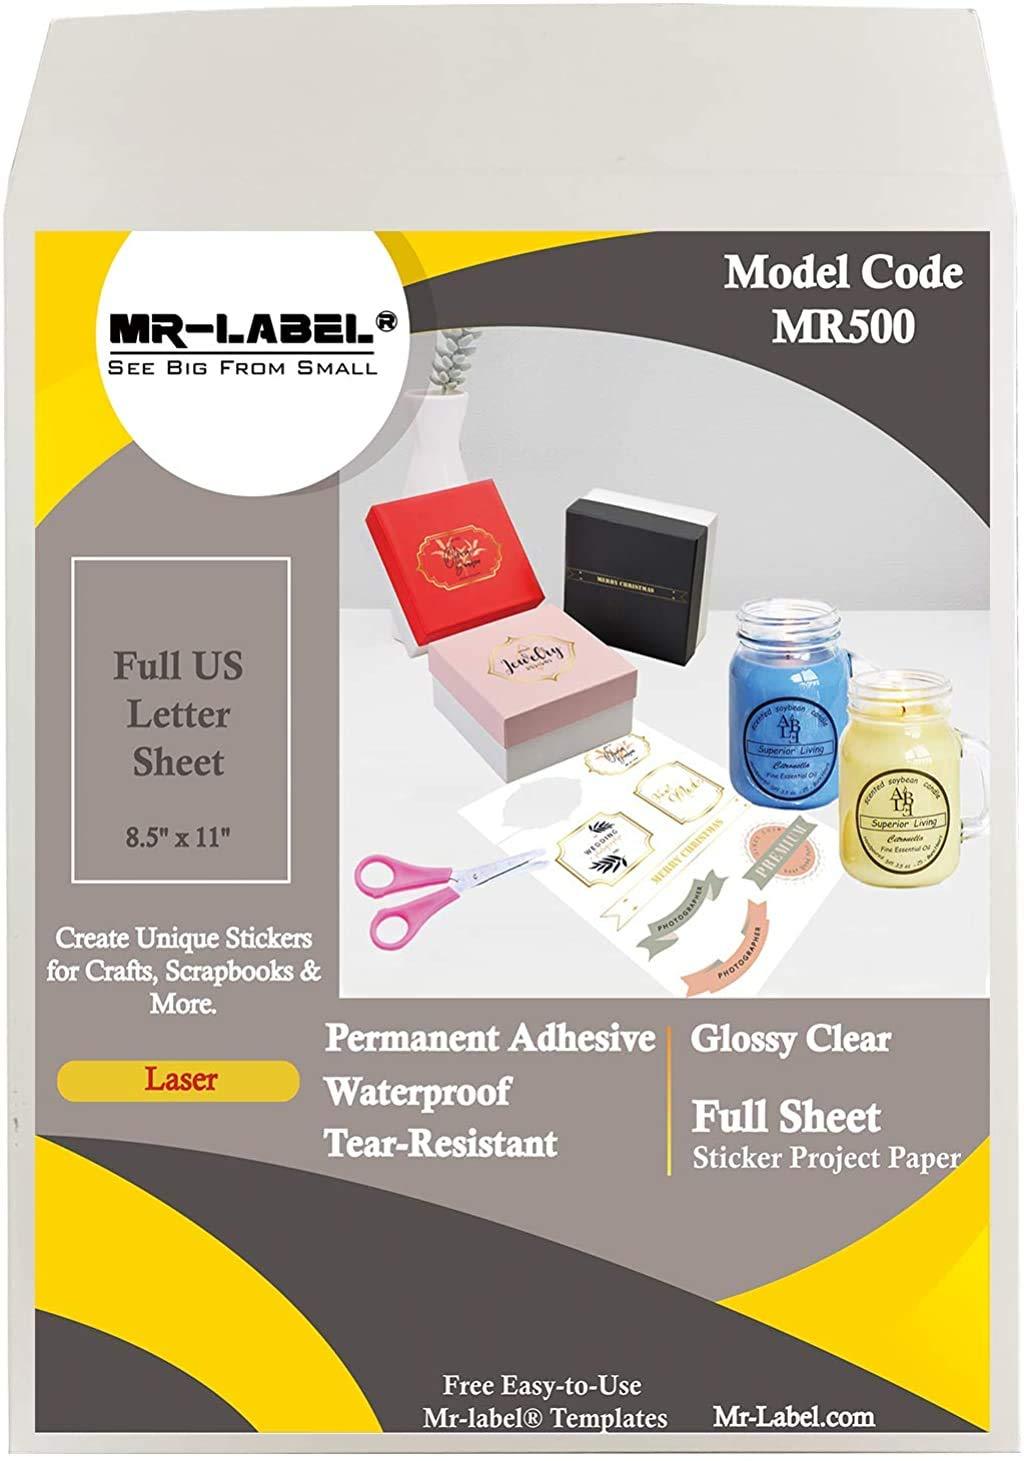 MR-Label Crystal Glossy Clear Multipurpose Labels - Waterproof & Tear-Resistant - Printable Sticker Paper for Holiday Crafts - for Laser Printer Only - 8.5" x 11" Full Sheet Labels - 25 Labels 25 Sheets - Total 25 Labels - LeoForward Australia